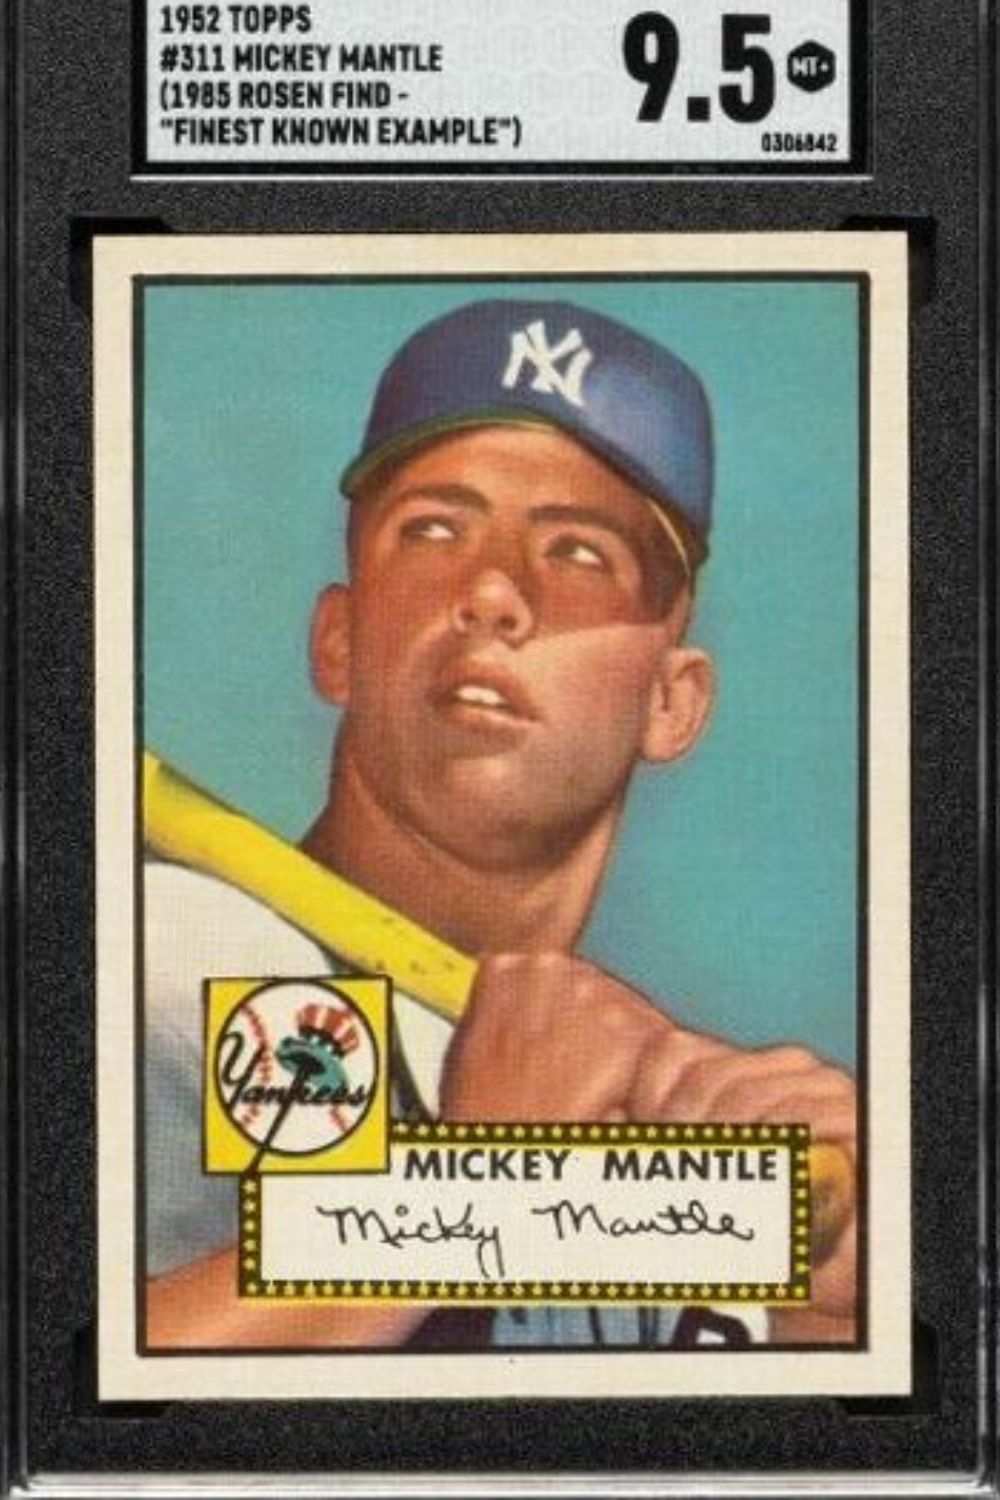 Mickey Mantle 1952 Baseball Card (Source: ESPN)